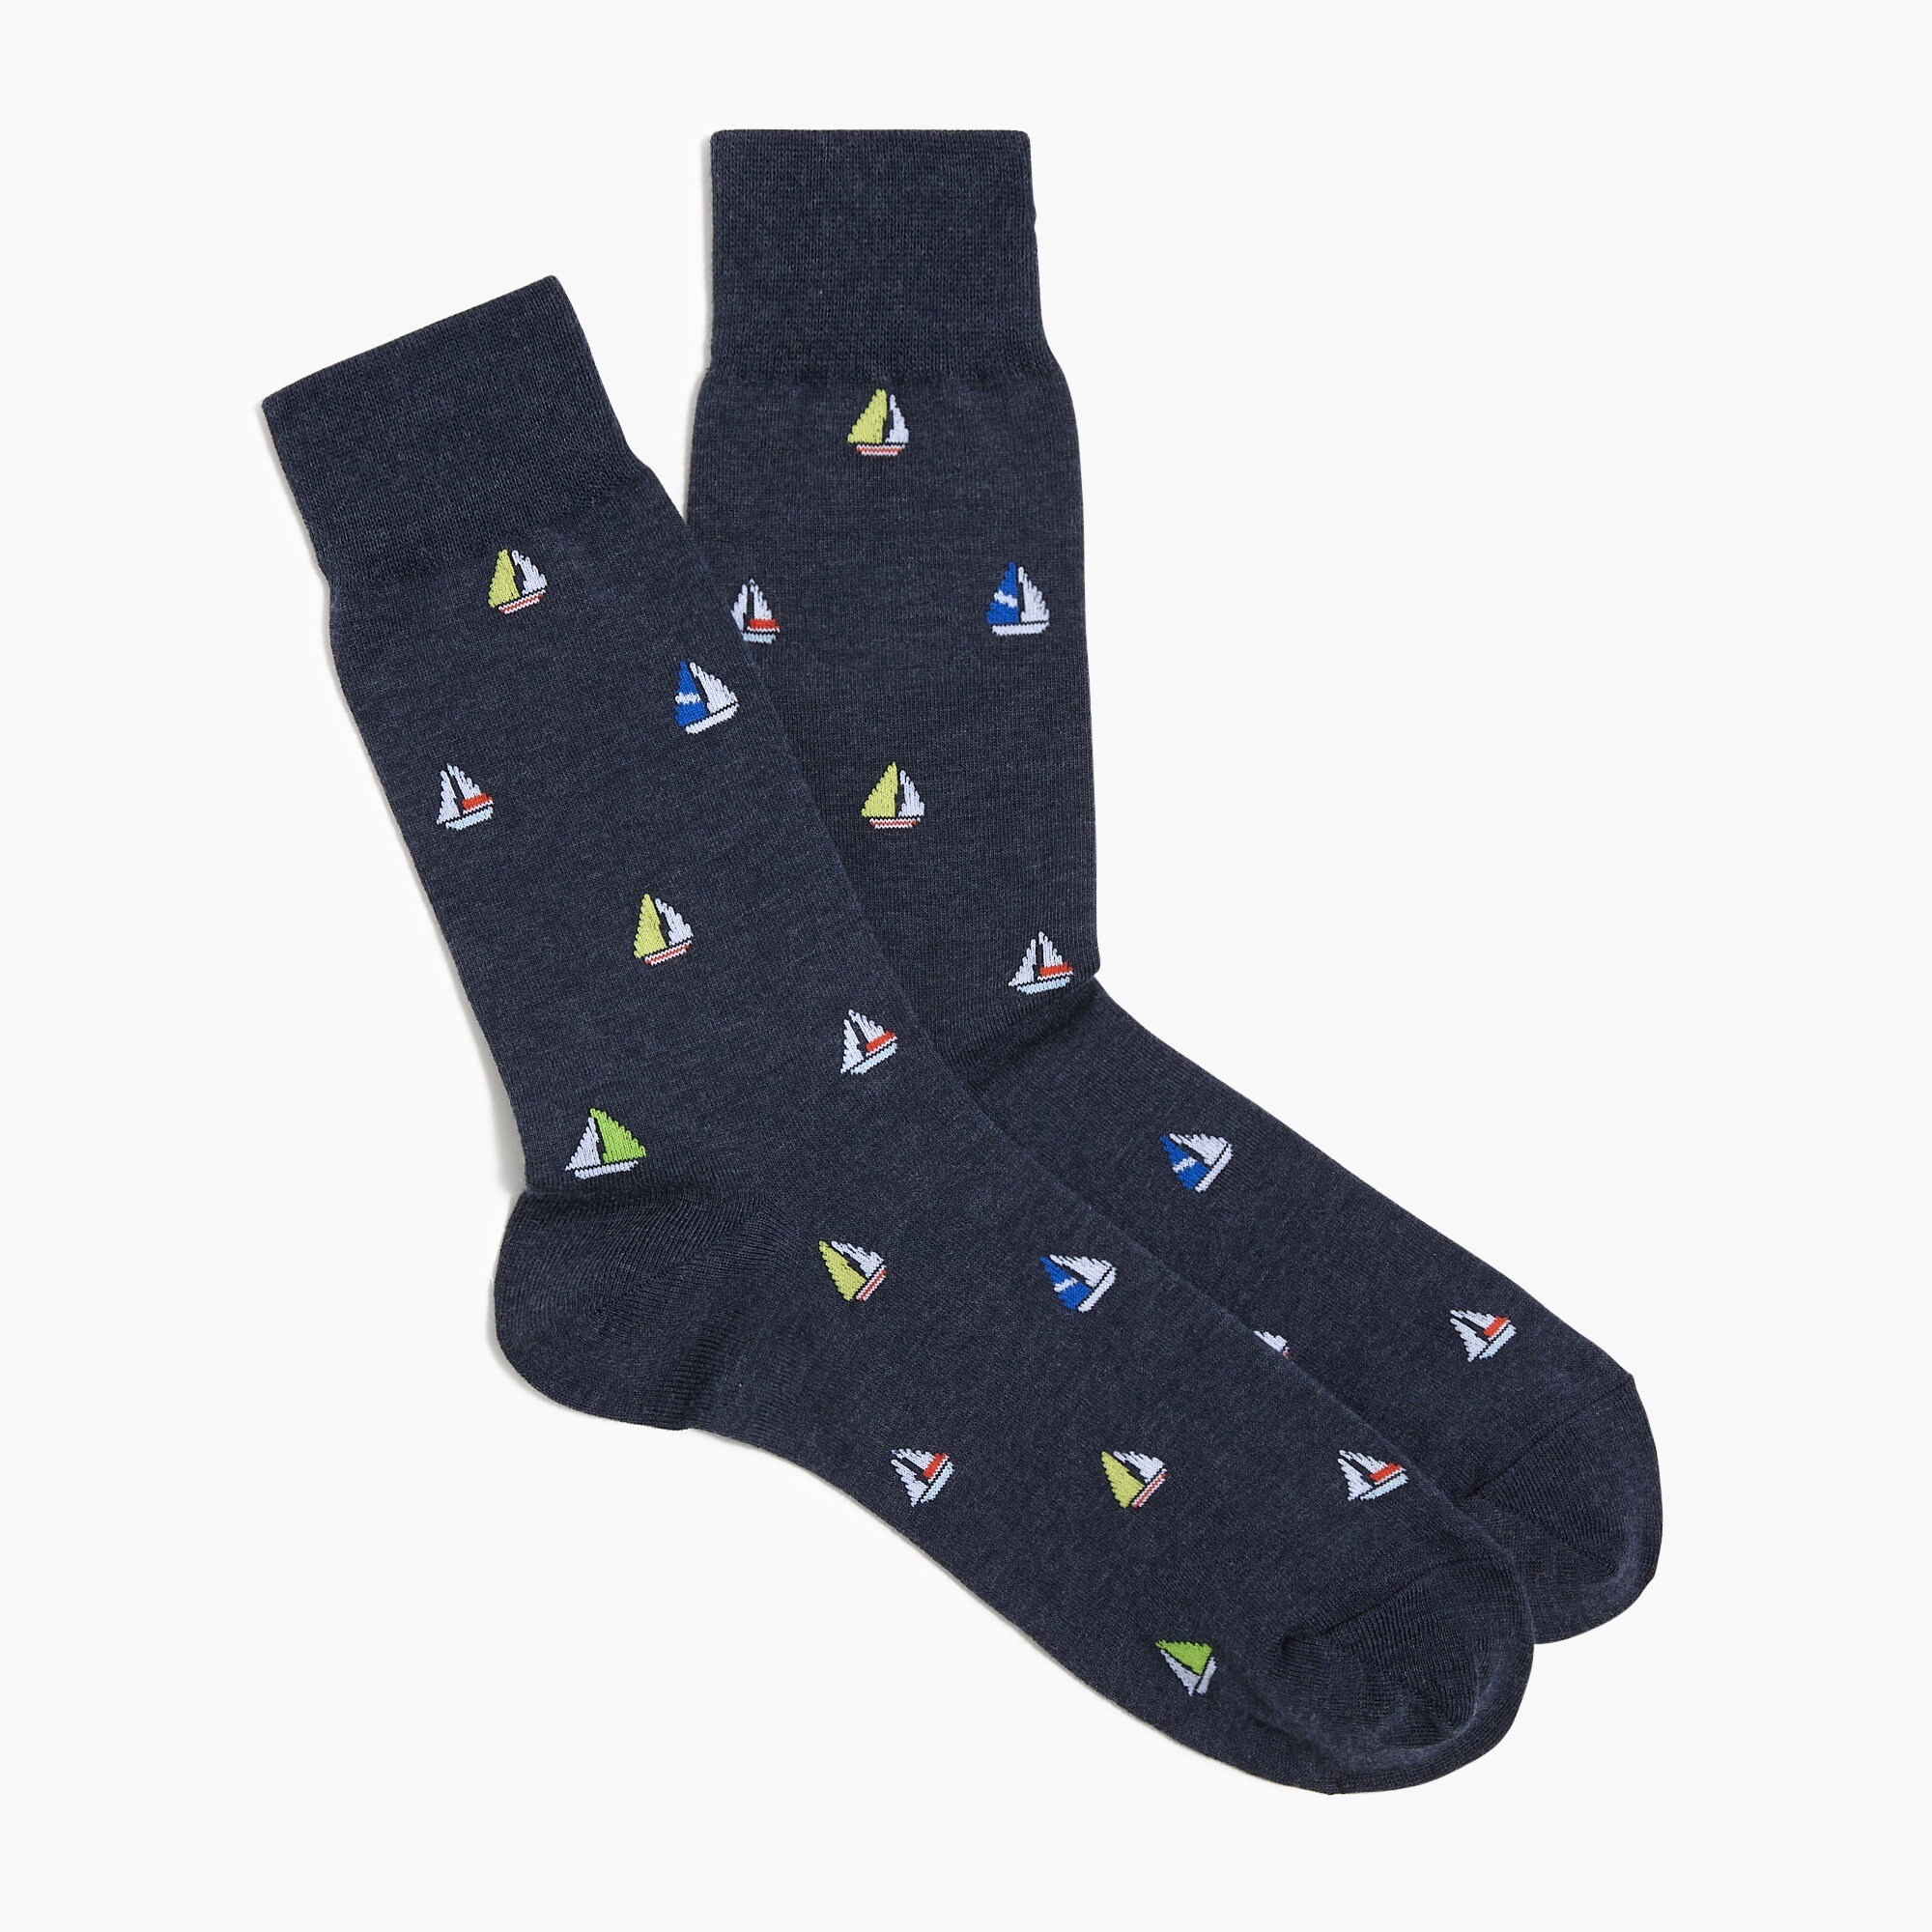  Sailboat socks